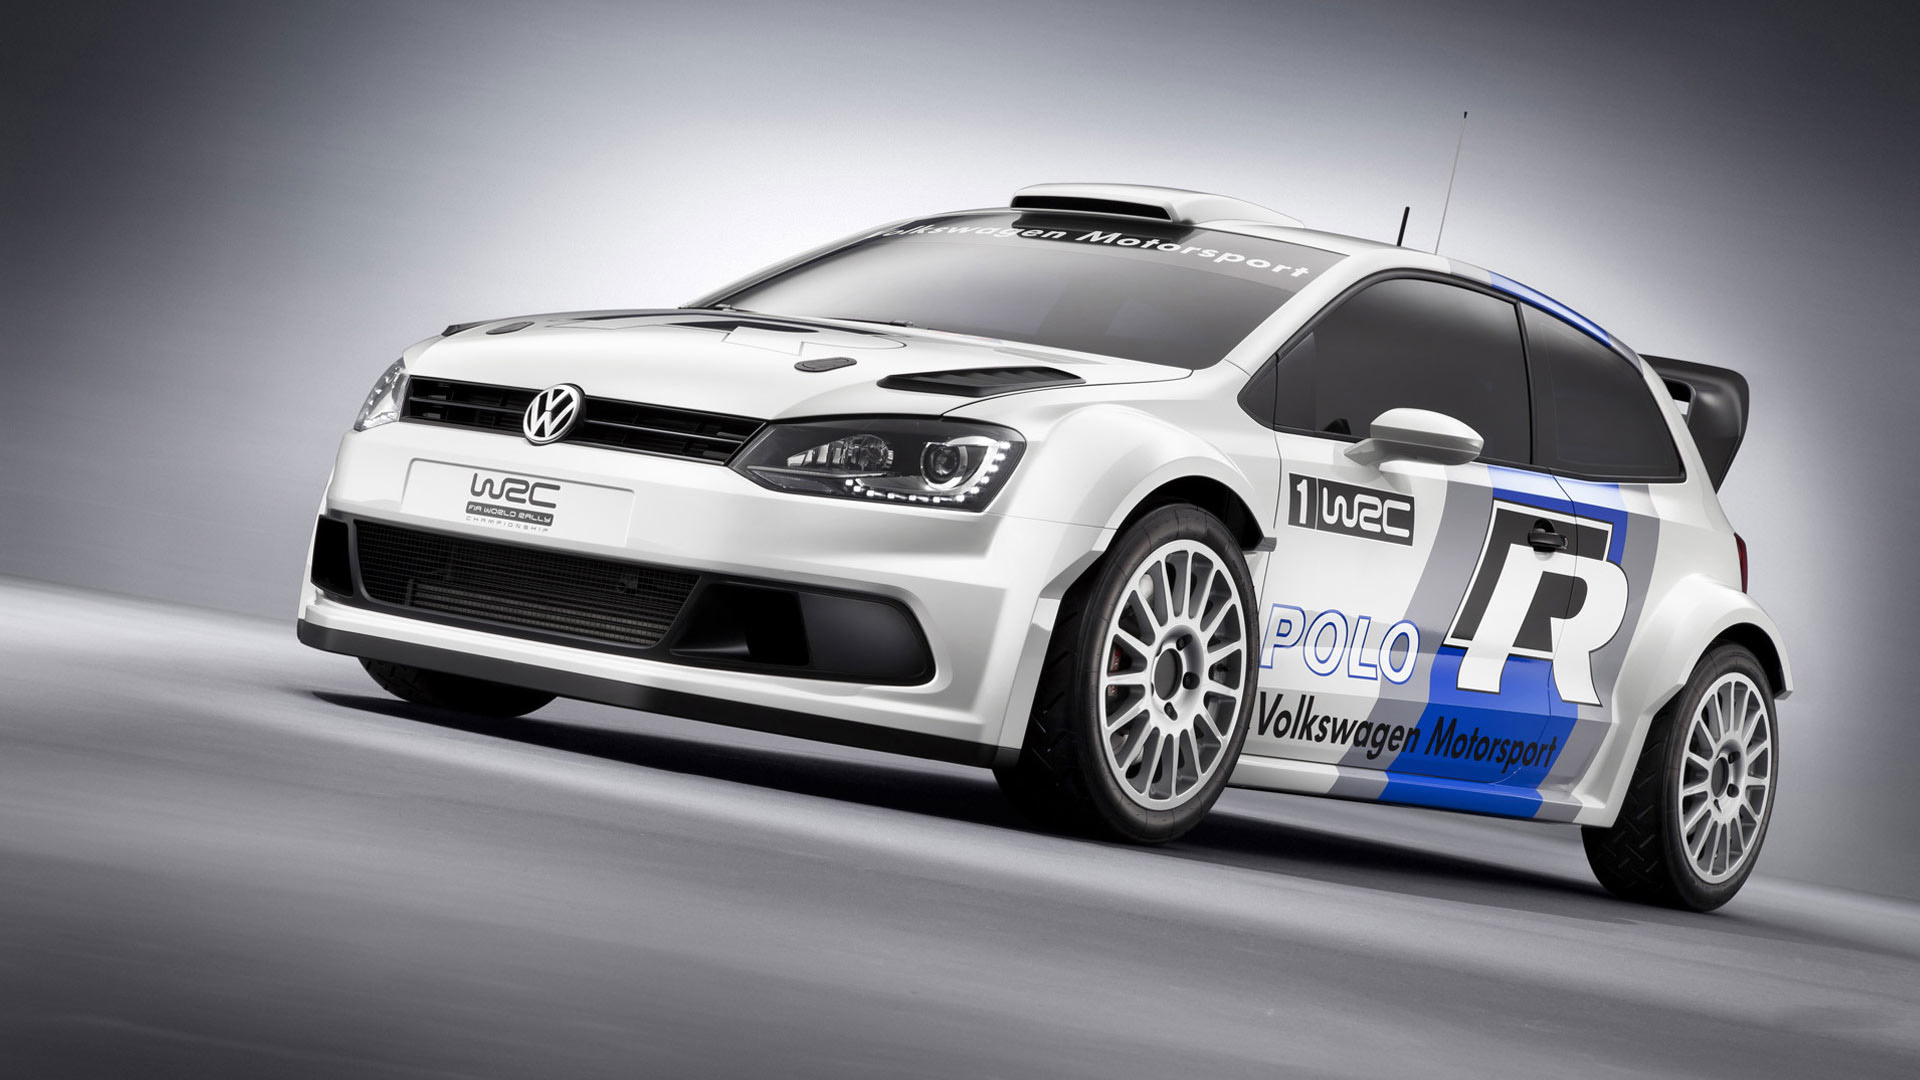  2011 Volkswagen Polo WRC Concept Wallpaper.